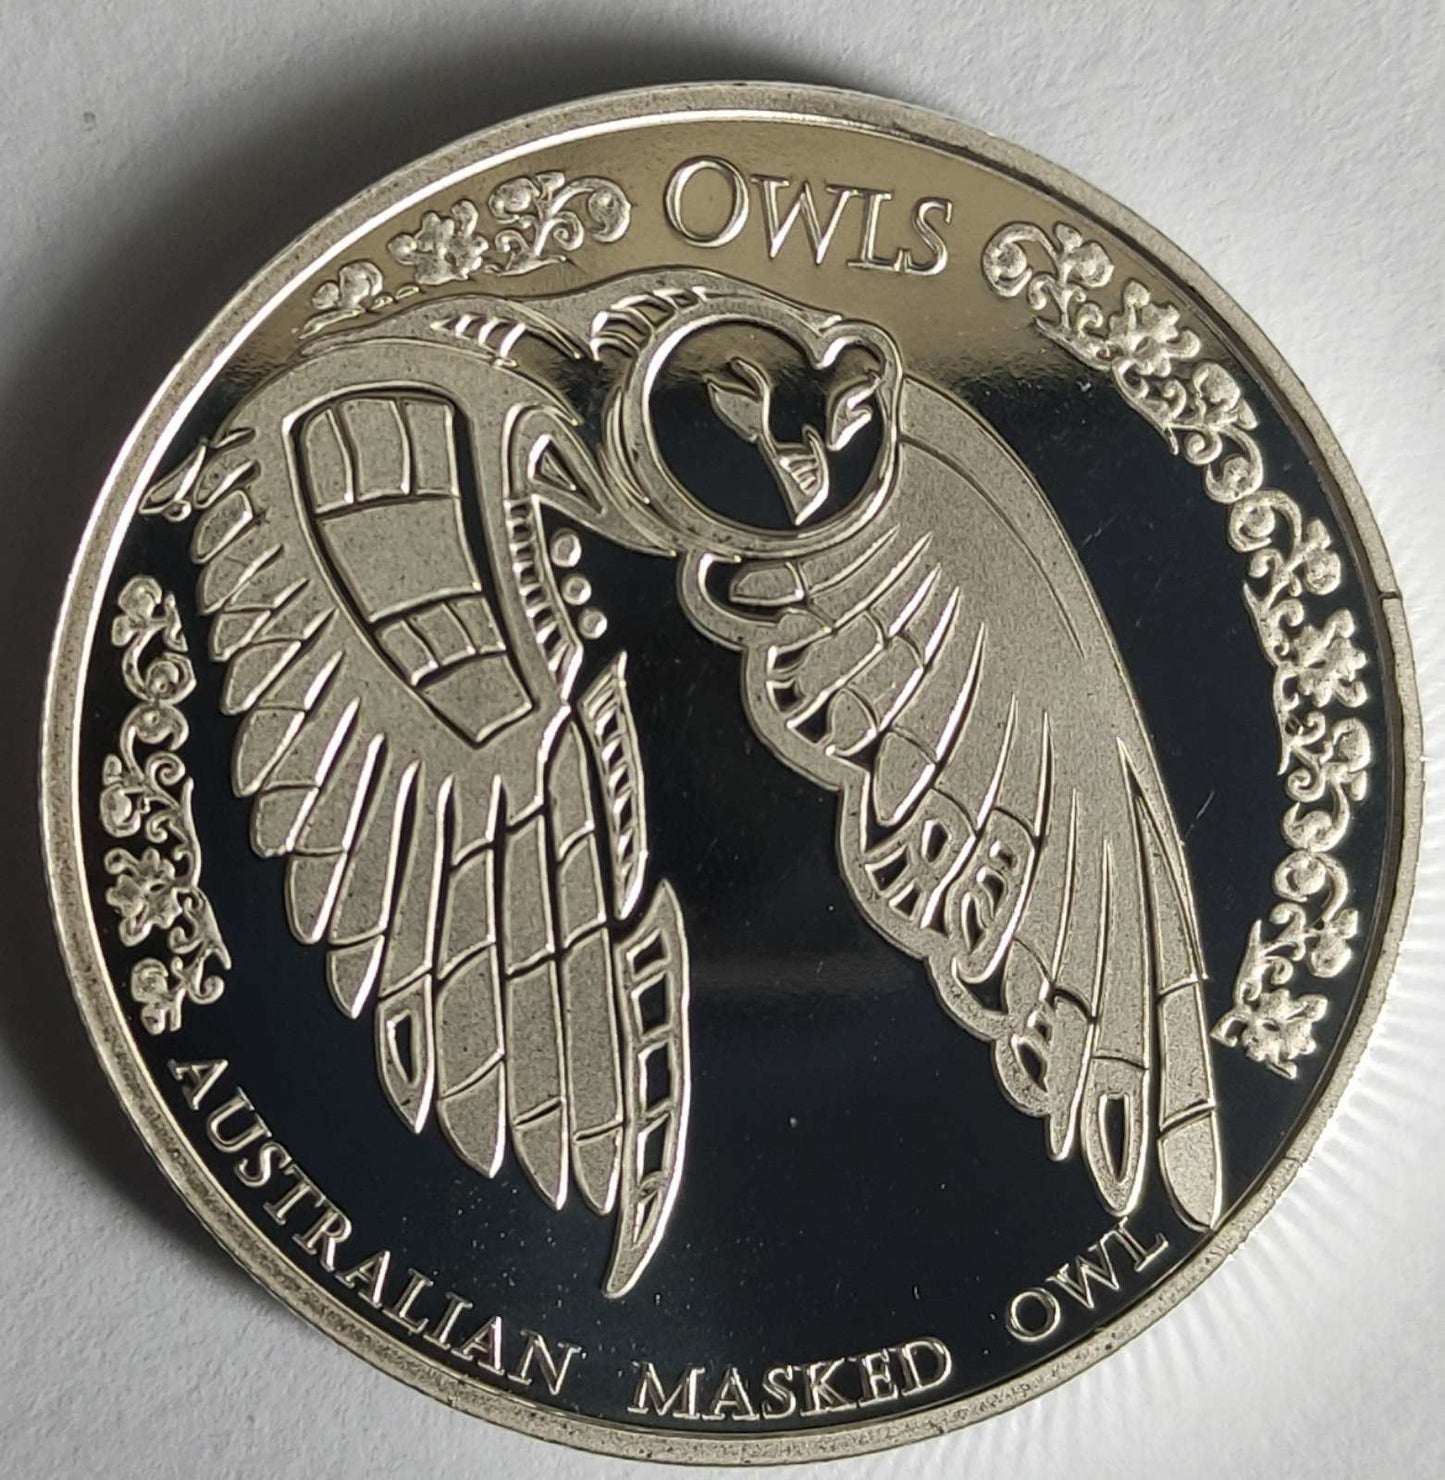 2022 Tokelau Australian Masked Owl 1 oz Silver Coin BU in Capsule